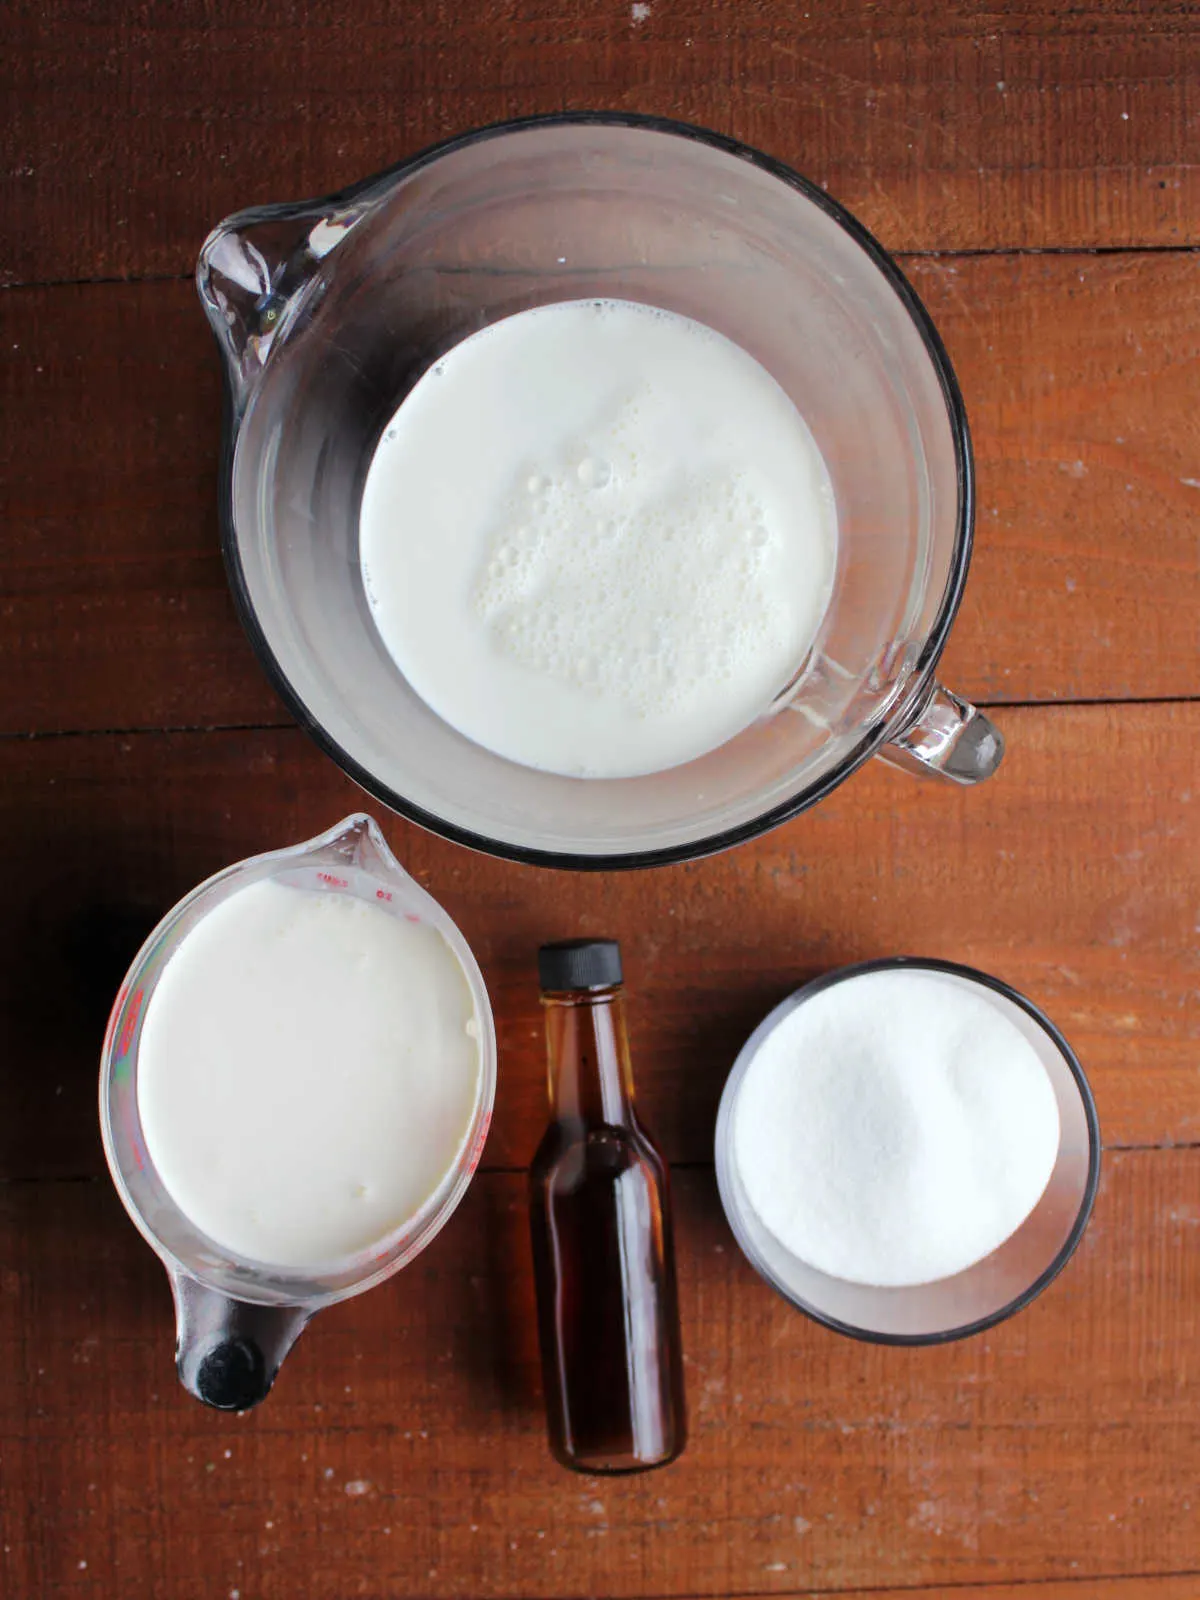 Ingredients for vanilla ice cream including cream, sugar, vanilla, and milk. 